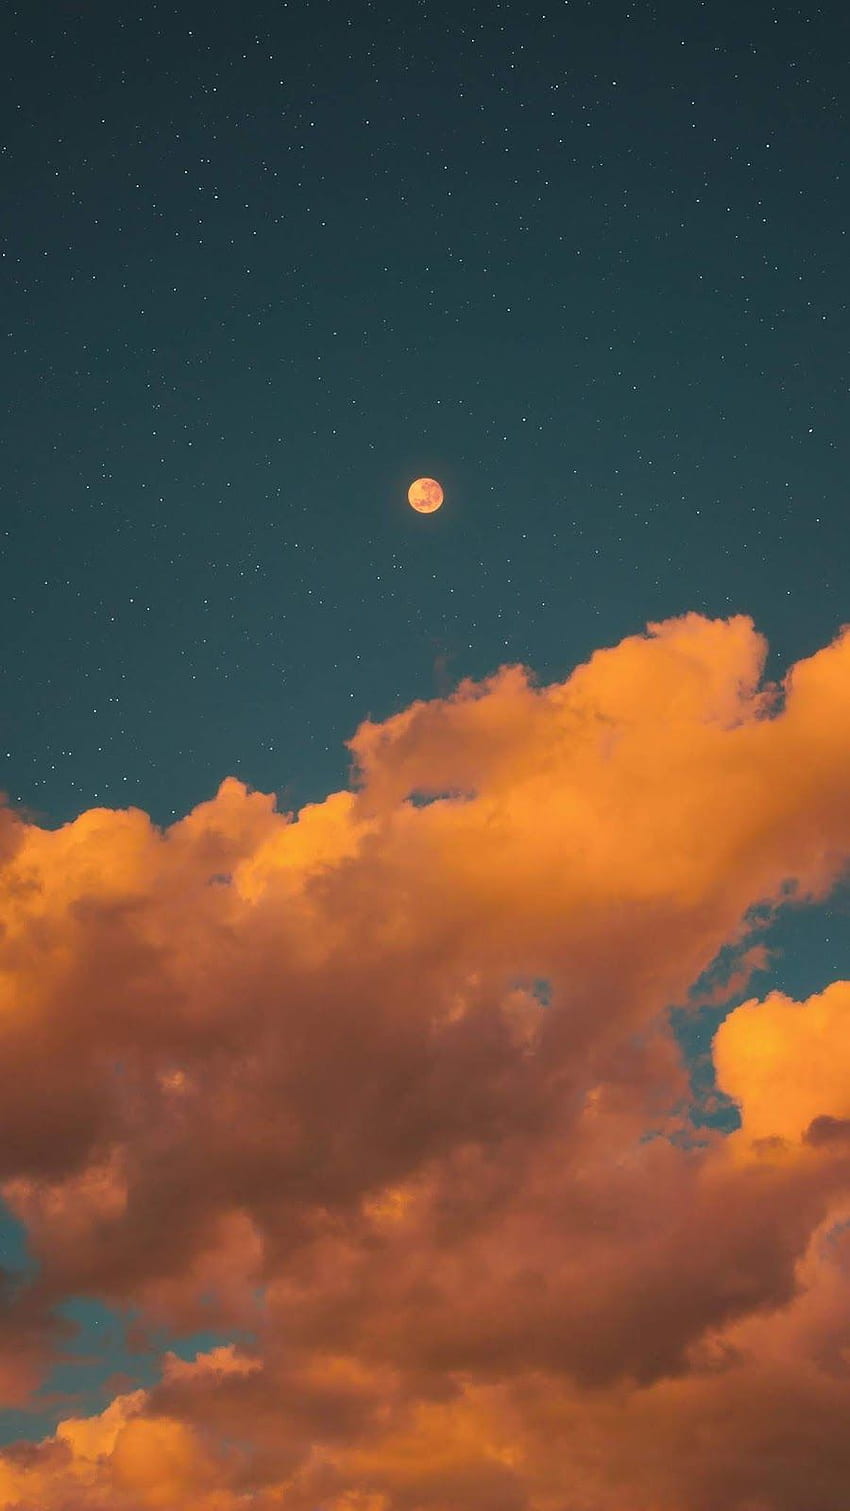 Full moon in the night sky. Fond d'écran orange, Fond d'écran téléphone, Fond écran vintage, Orange Cloud HD phone wallpaper